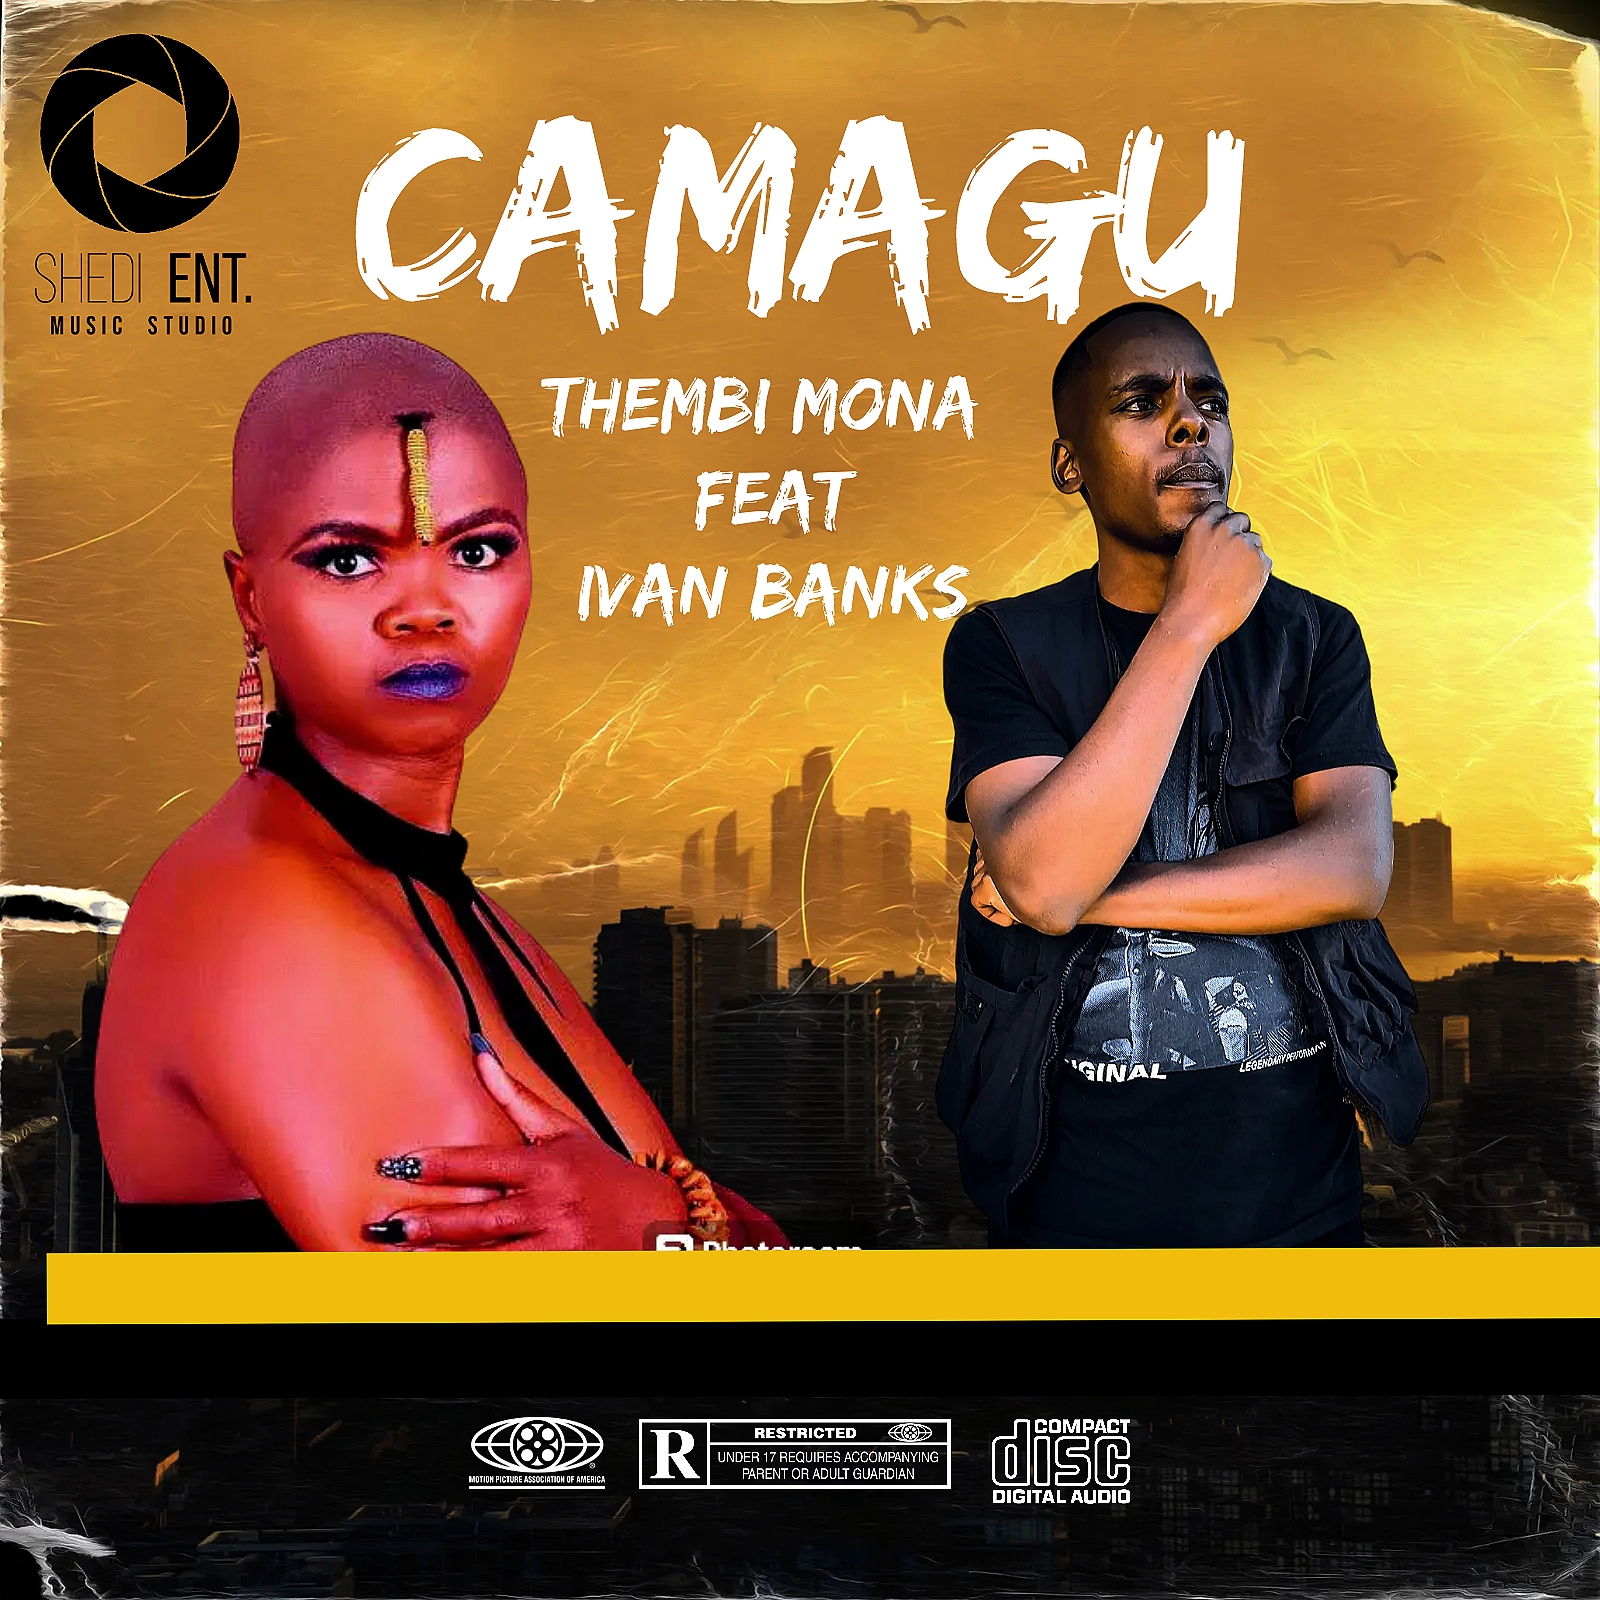 Camgu - Thembi Mona feat Ivan Banks